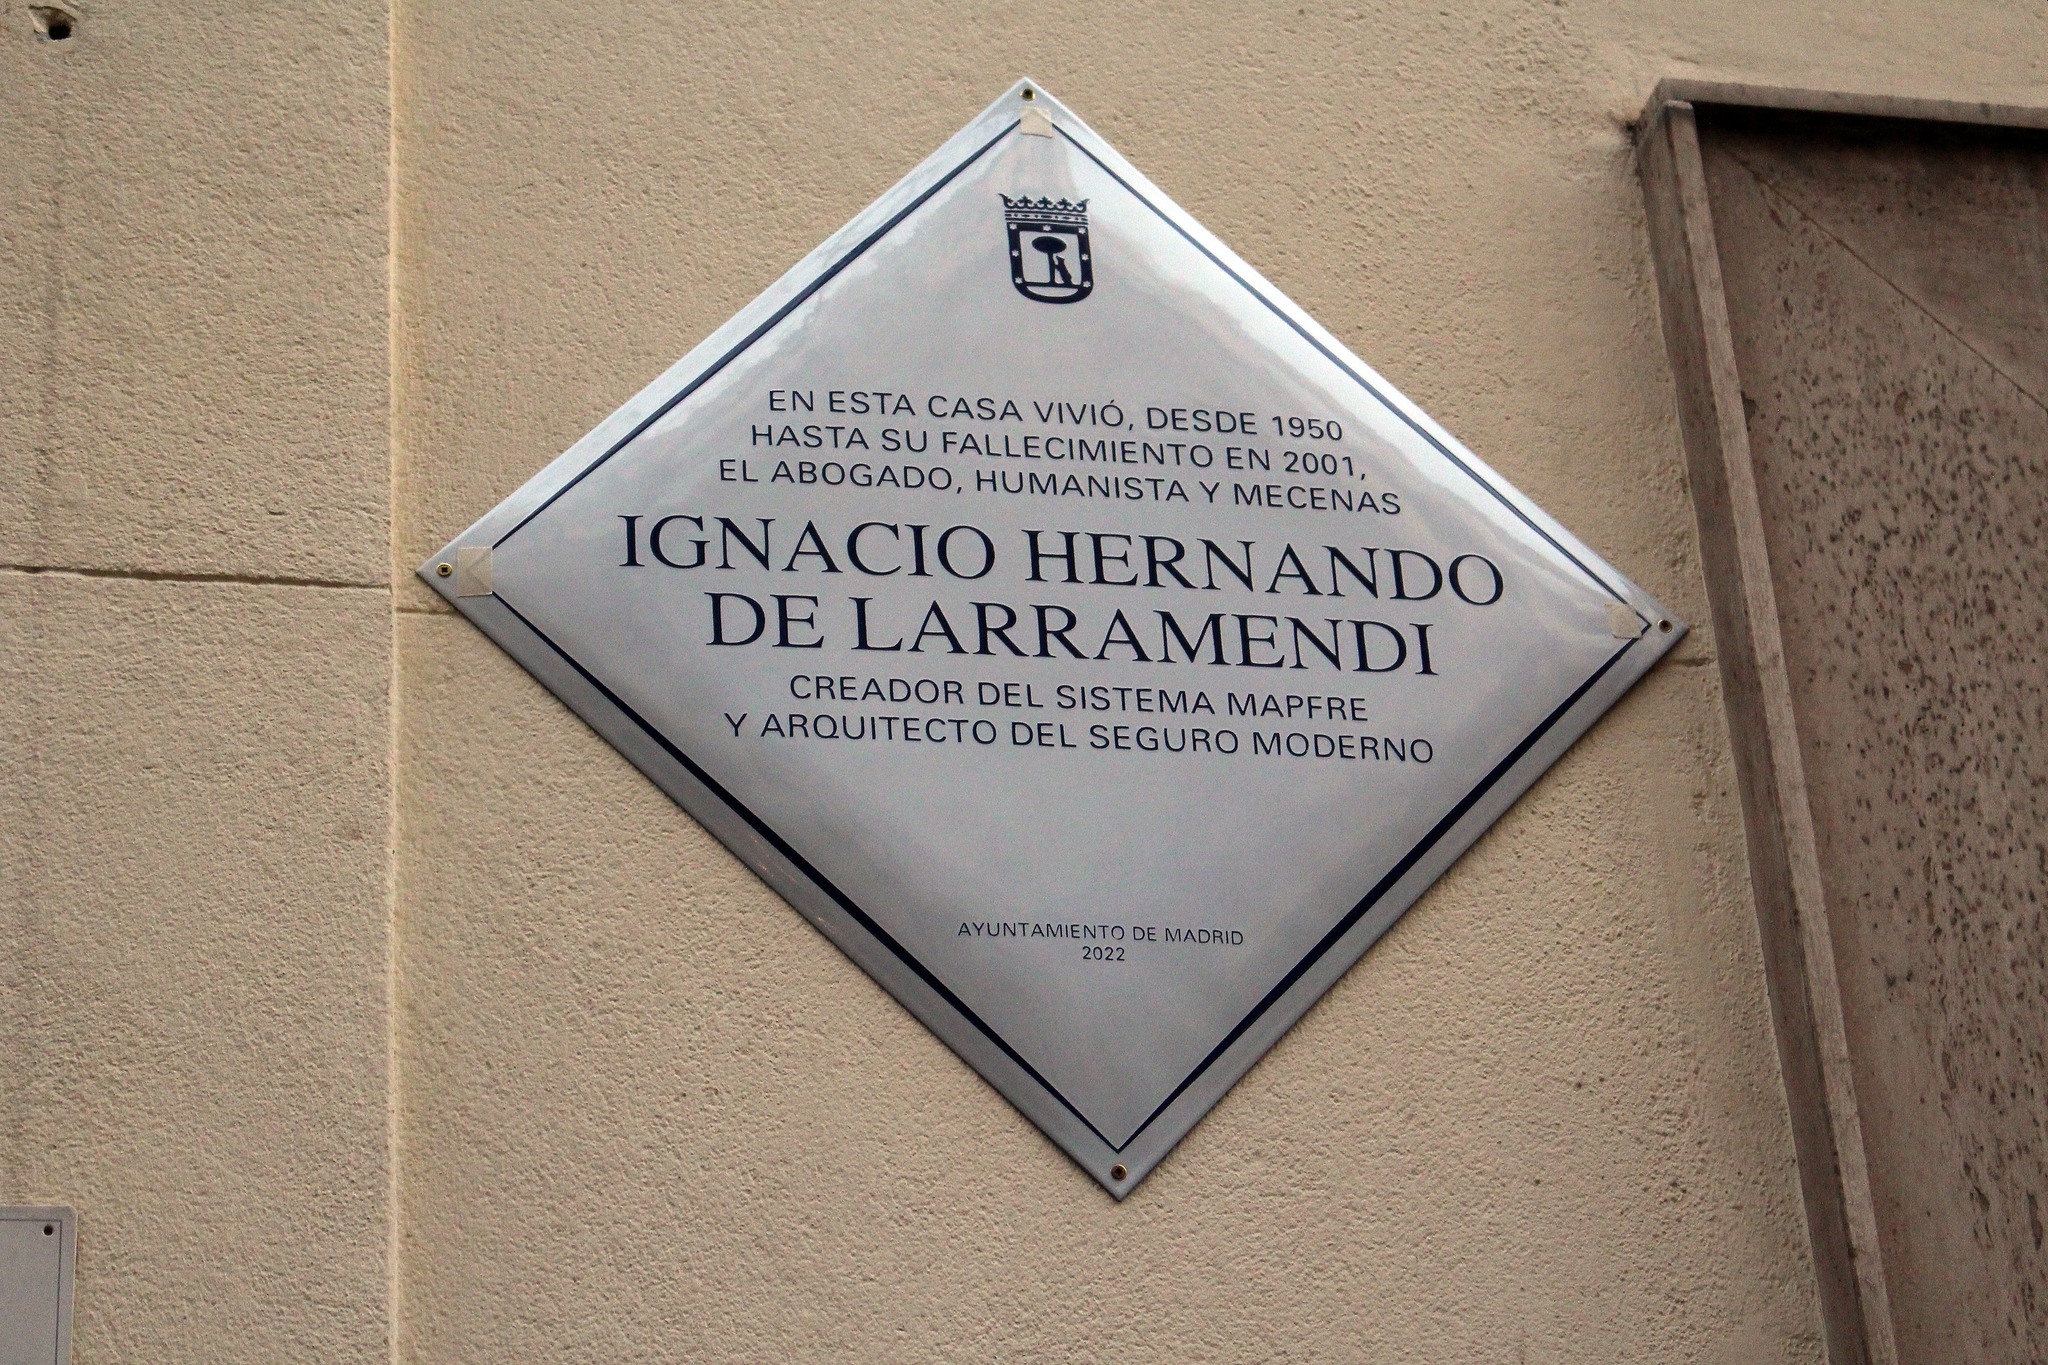 Ignacio Hernando de Larramendi